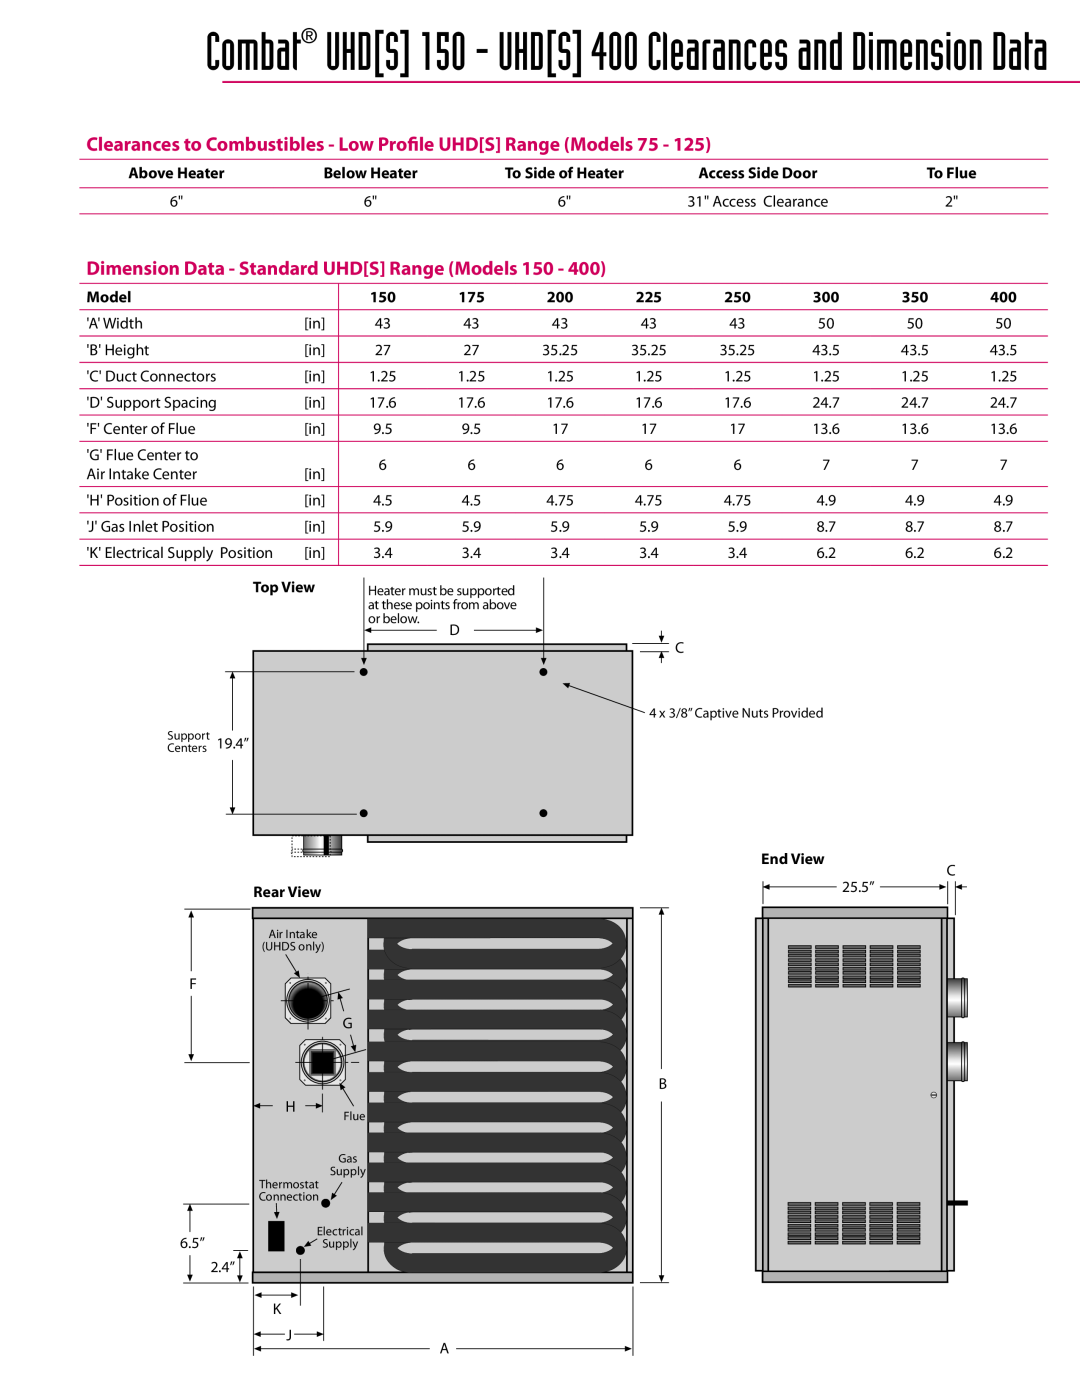 Roberts Gorden UHD[S] 150-400, UHD[S] 75 - 125 Dimension Data - Standard UHDS Range Models, Top View, End View, Rear View 